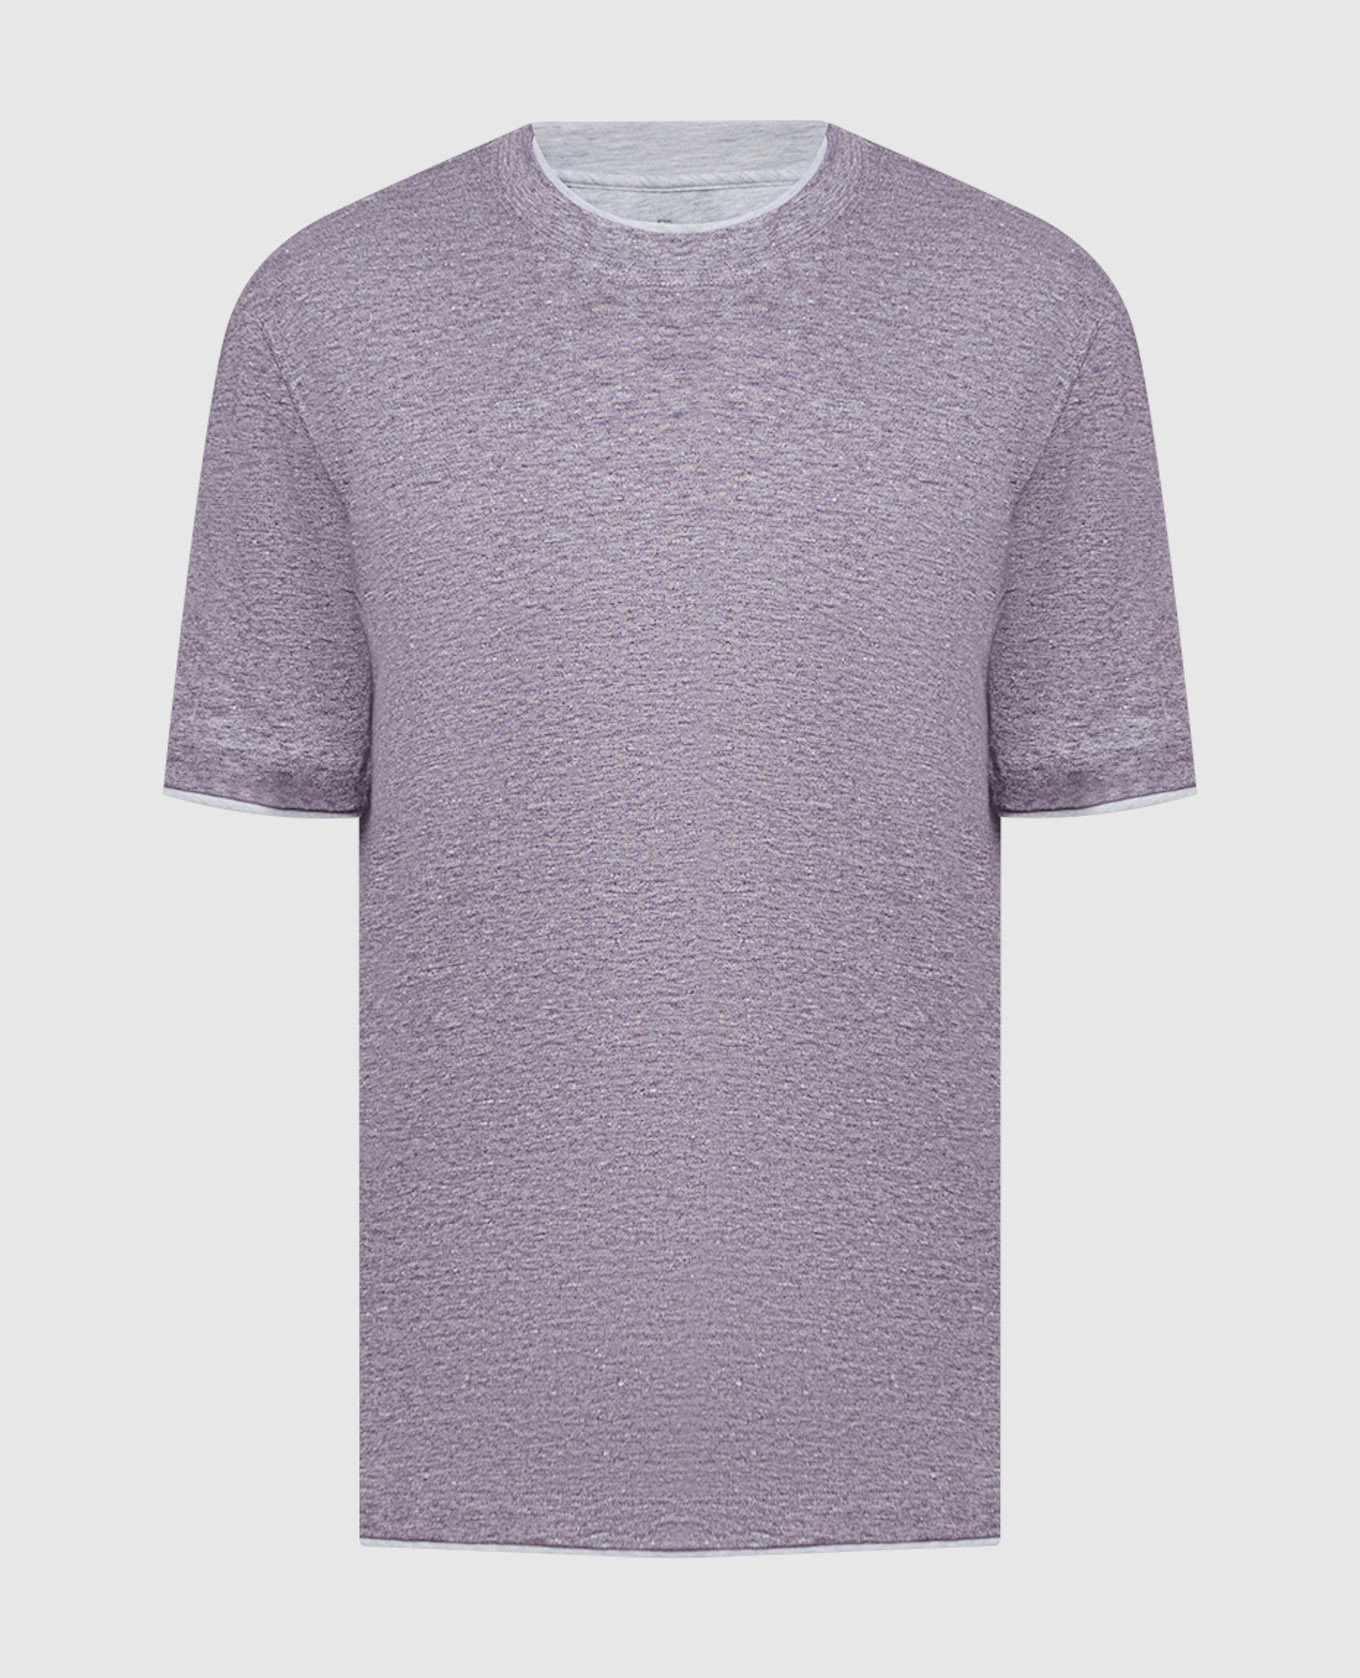 Purple melange t-shirt with linen